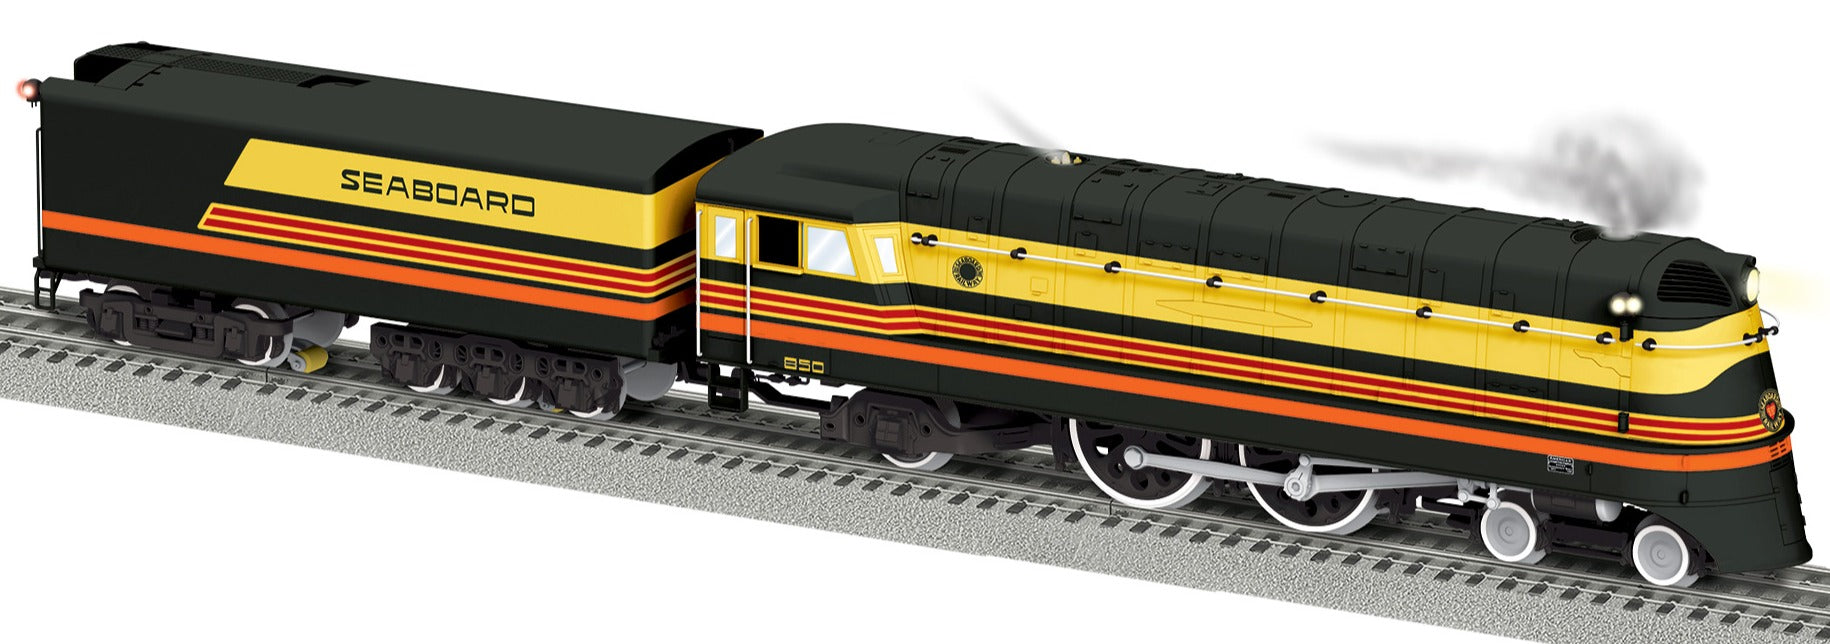 Lionel 2431740 - Legacy 4-4-2 Steam Locomotive "Seaboard" #850